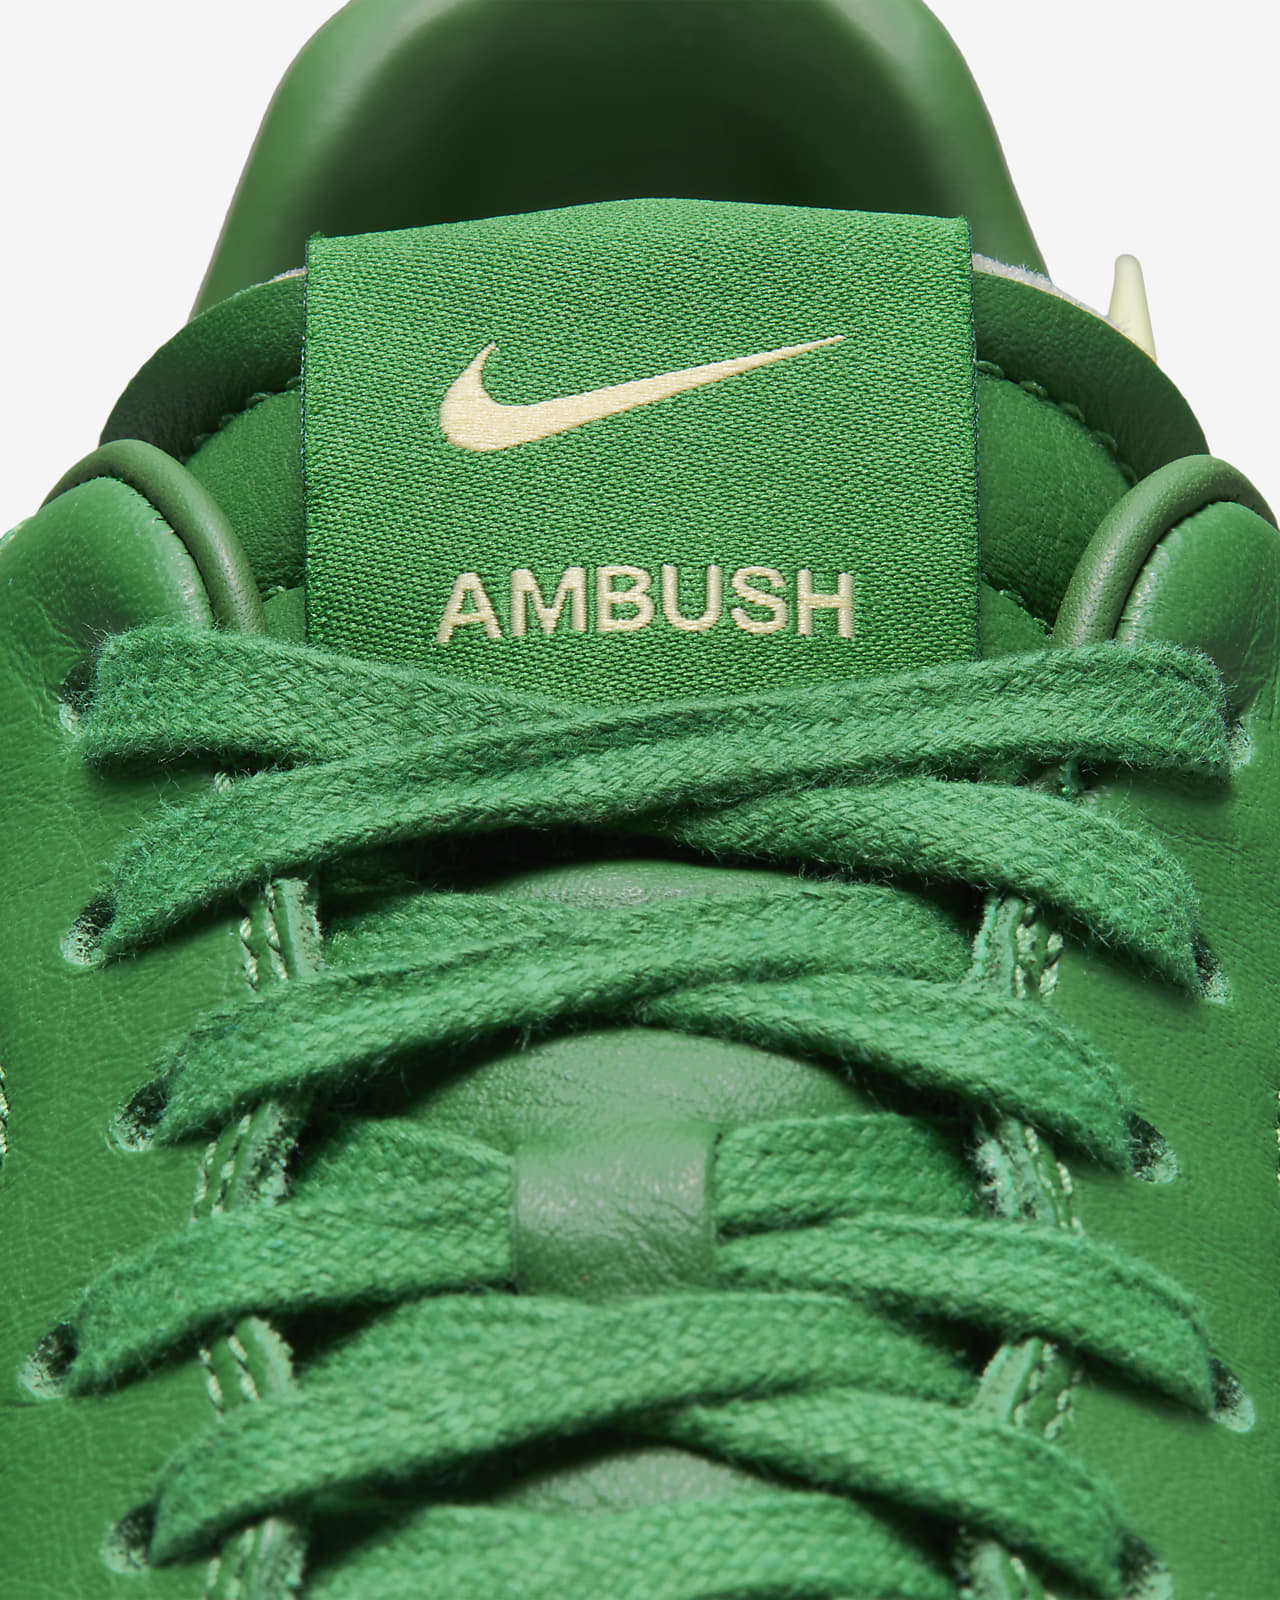 Nike Air Force 1 Low x Ambush Men's Shoes